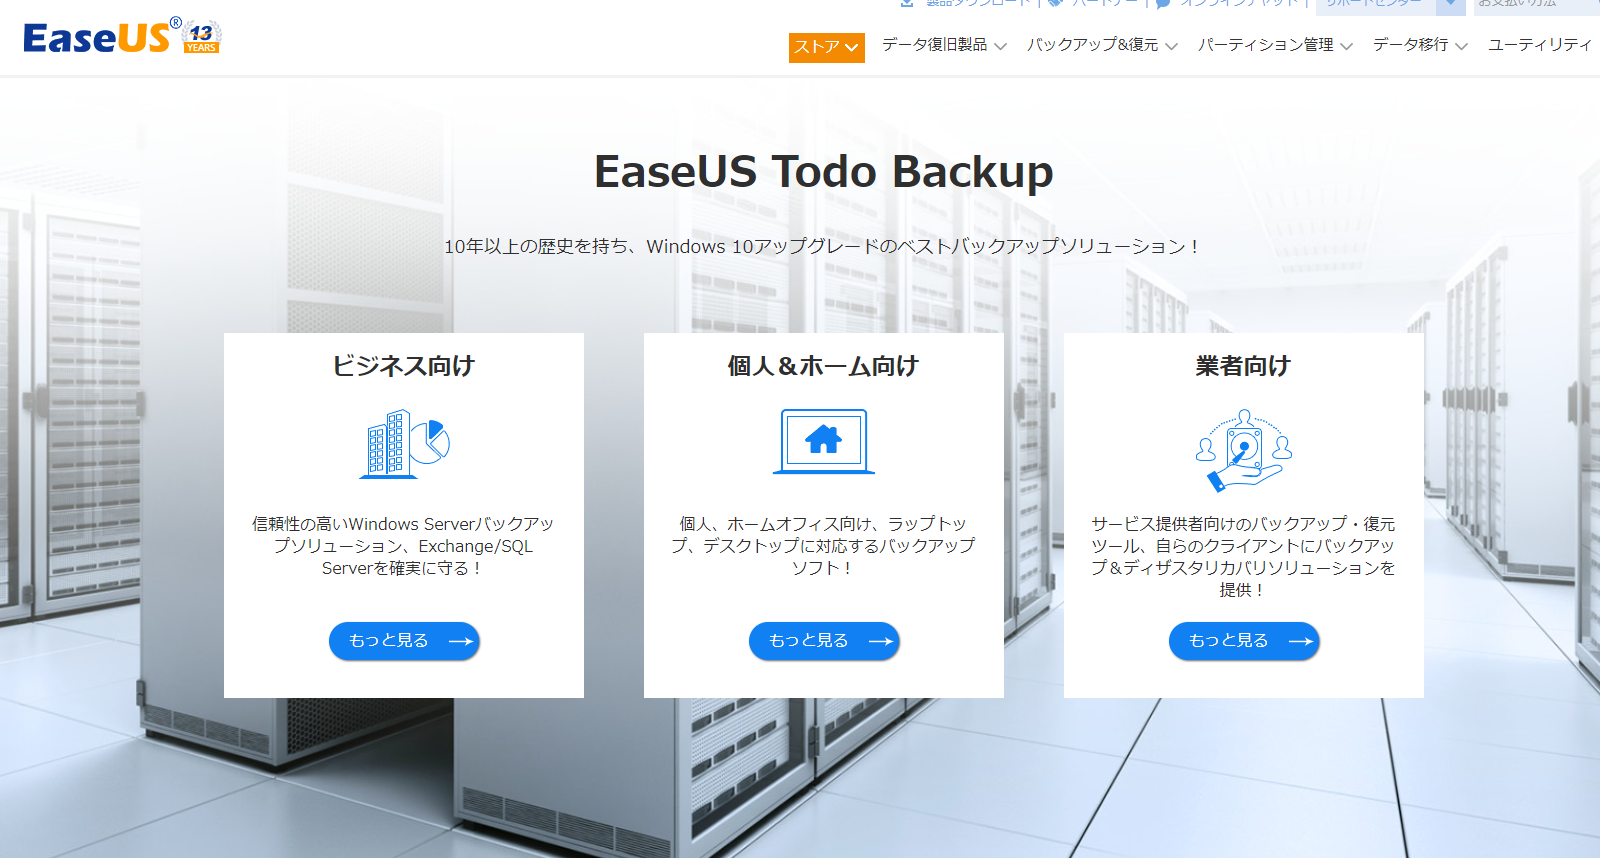 【PR】Windows 10更改に役立つ安価なバックアップツール、EaseUS Todo Backup